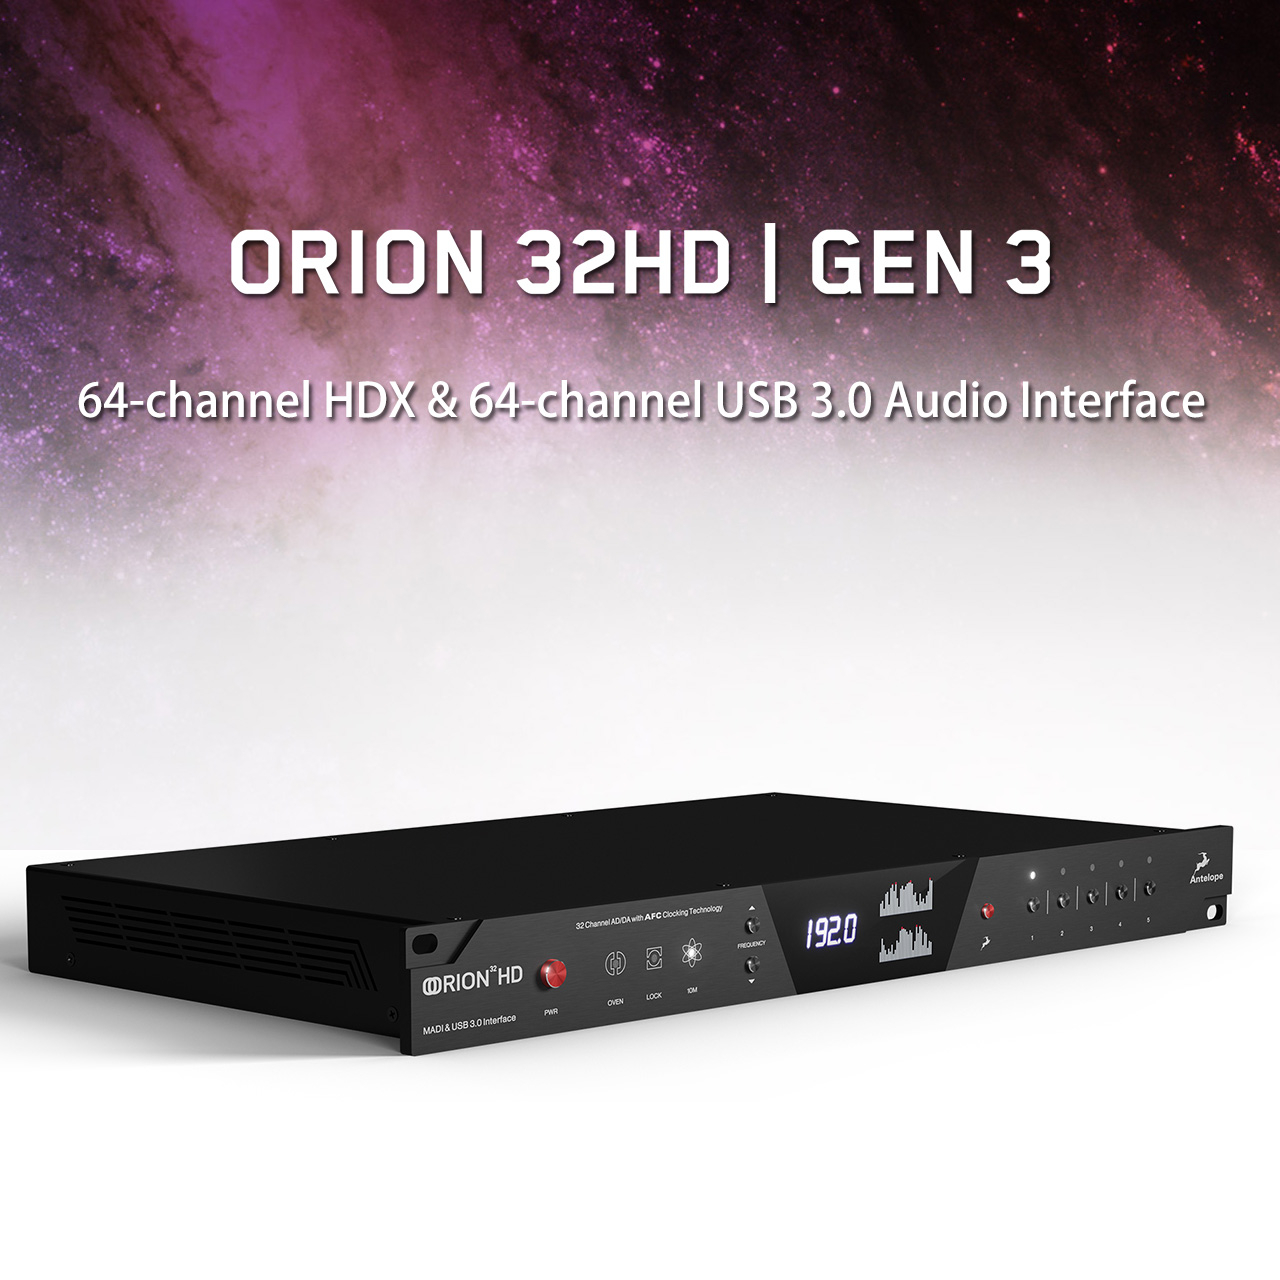 Orion 32 HD | Gen3 / HDX & USB3.0 Interface